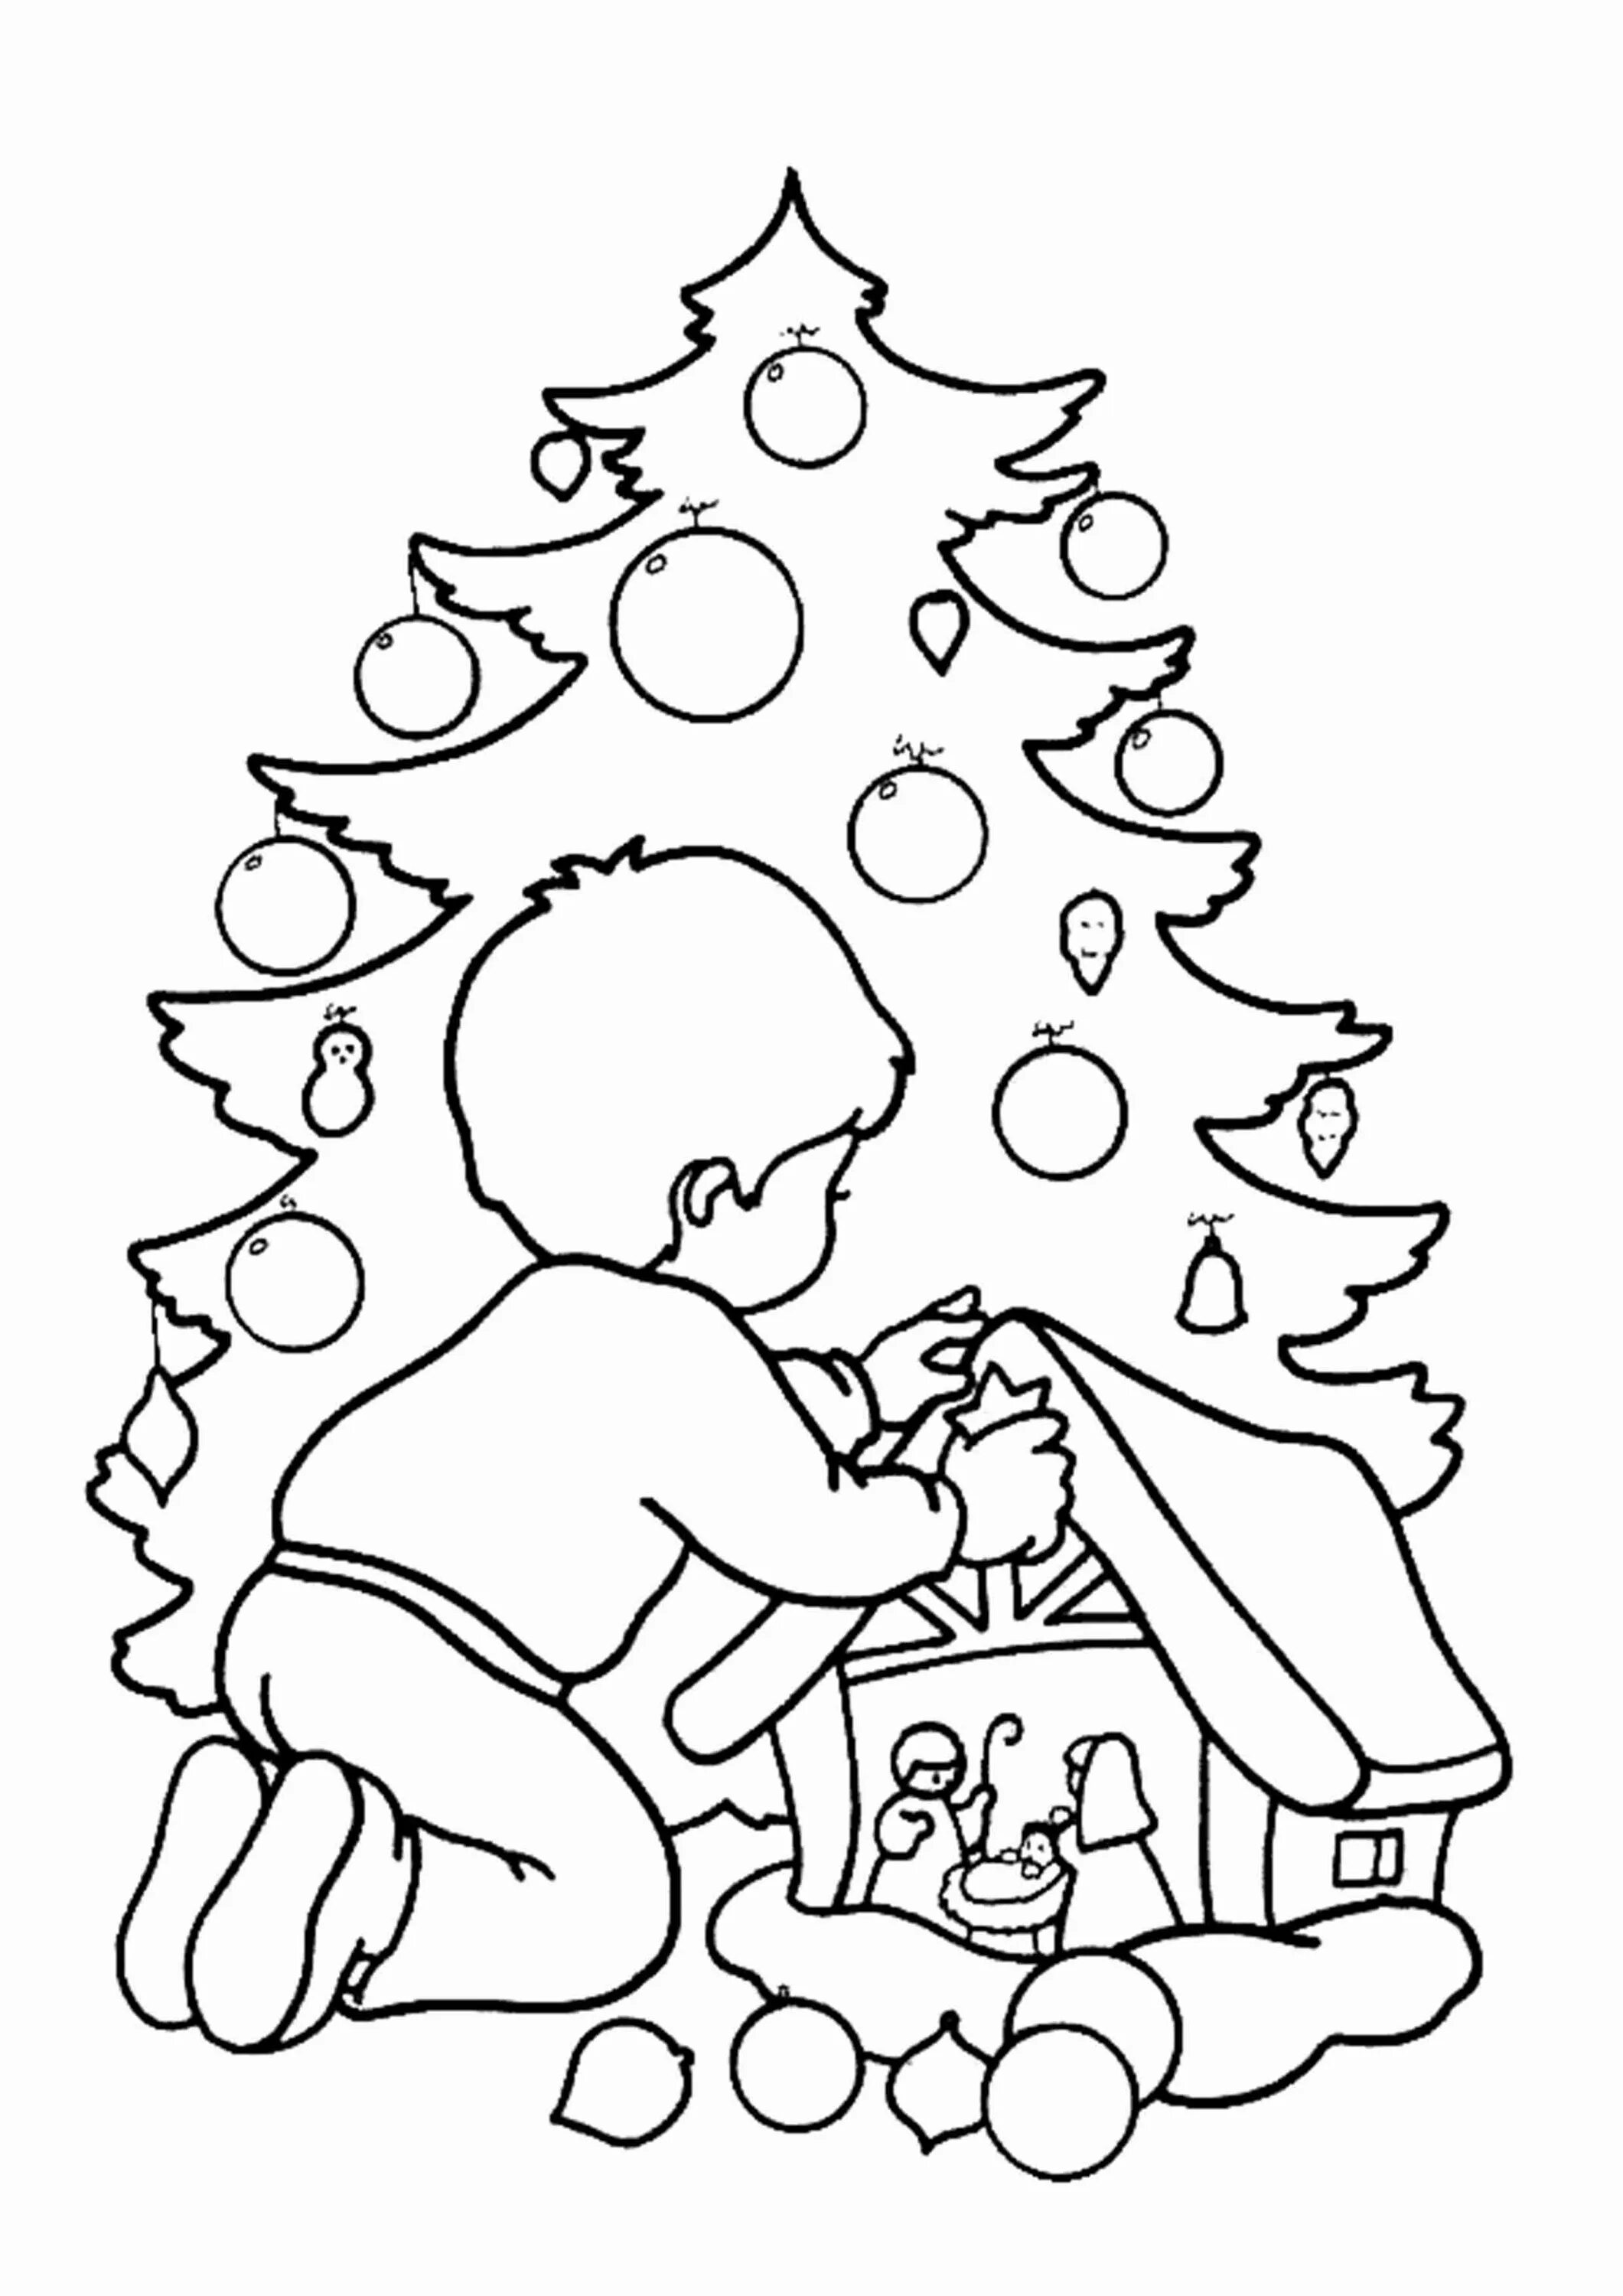 Wonderful Christmas miracle coloring book